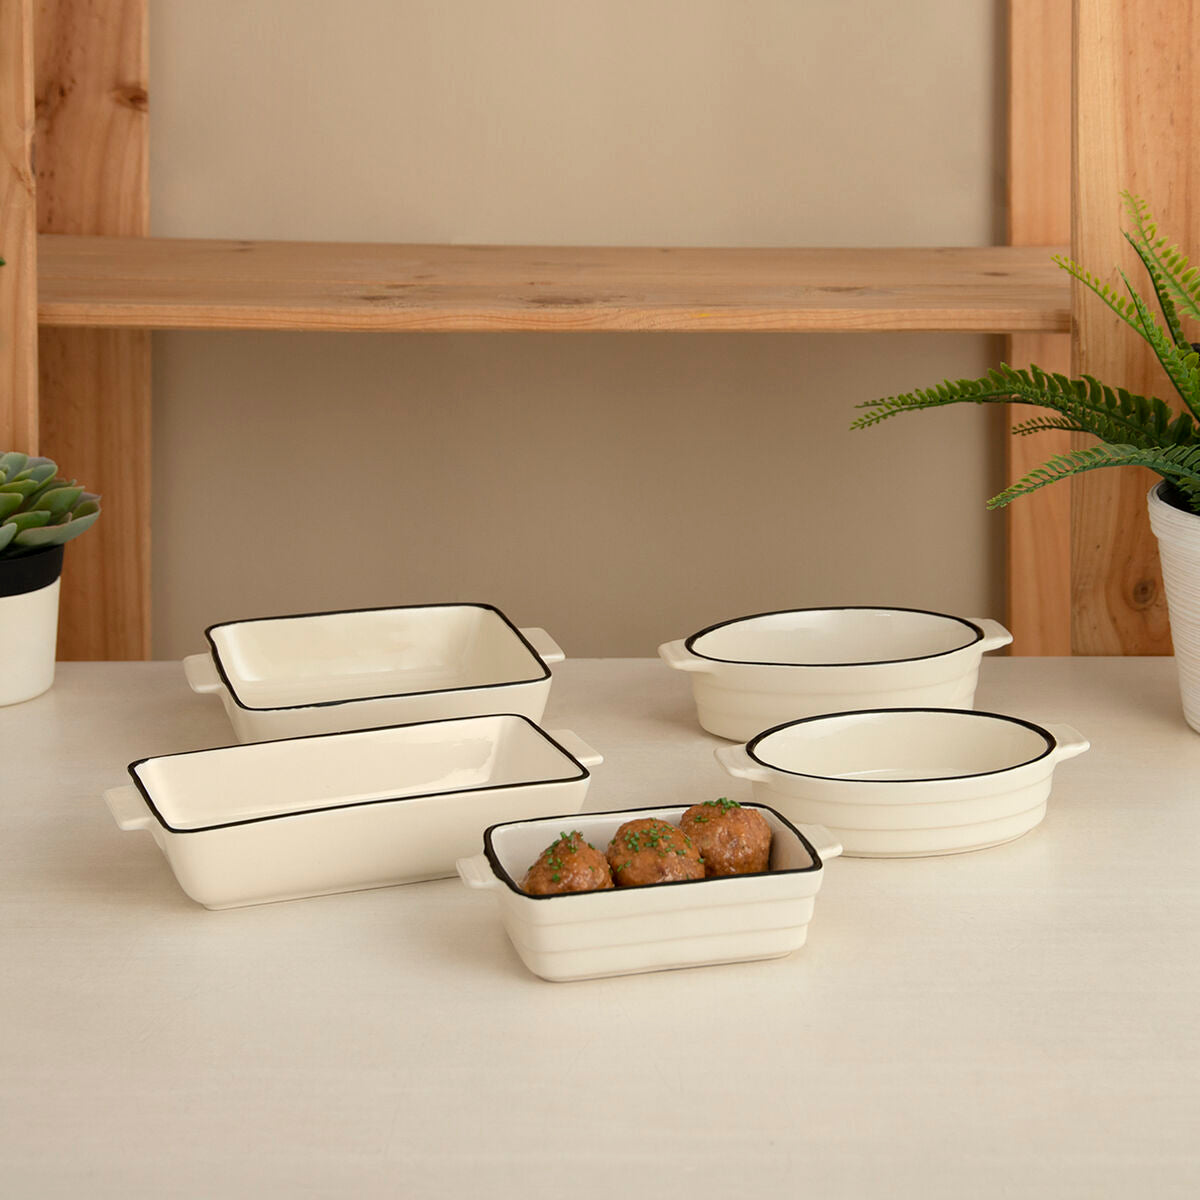 Saucepan Quid Cocco Oval Ceramic White (18 x 11 x 4 cm) (Pack 12x)